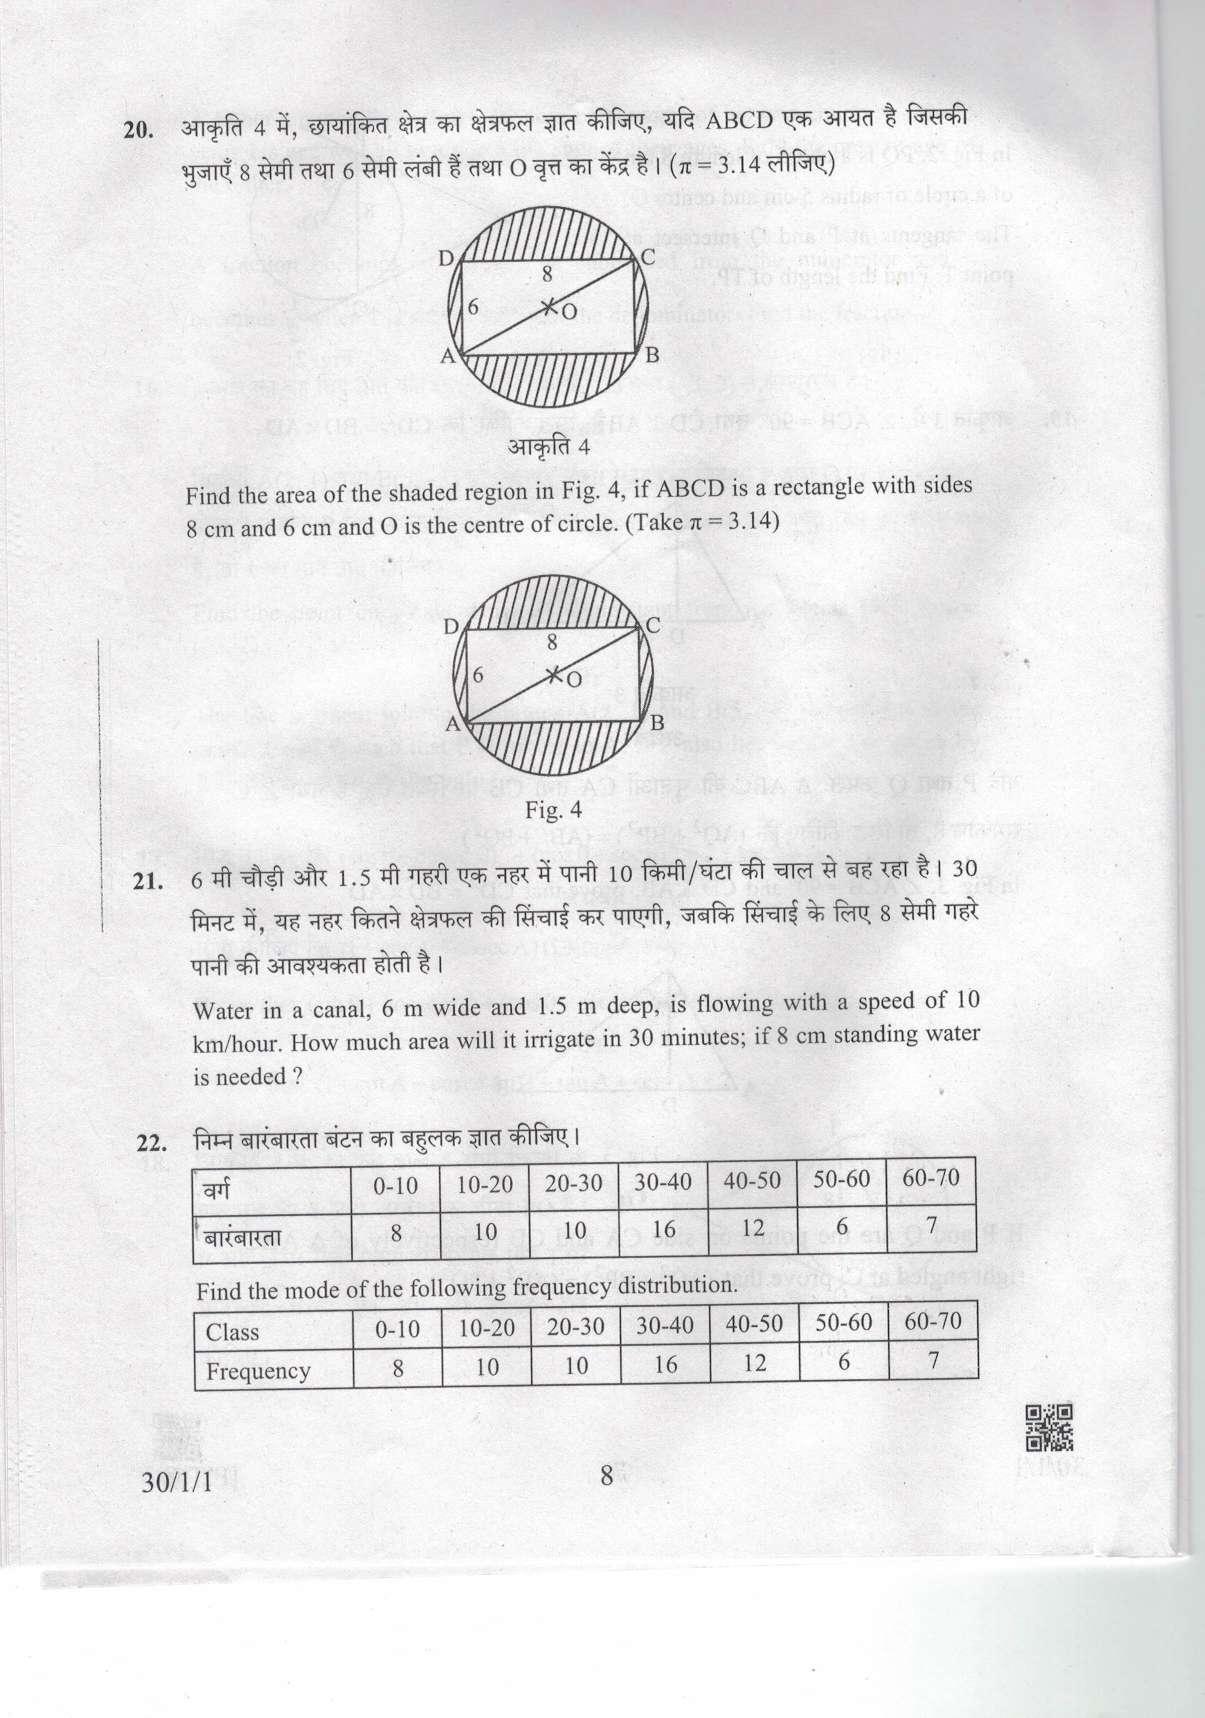 CBSE Class 10 30-1-1 Mathematics 2019 Question Paper - Page 8